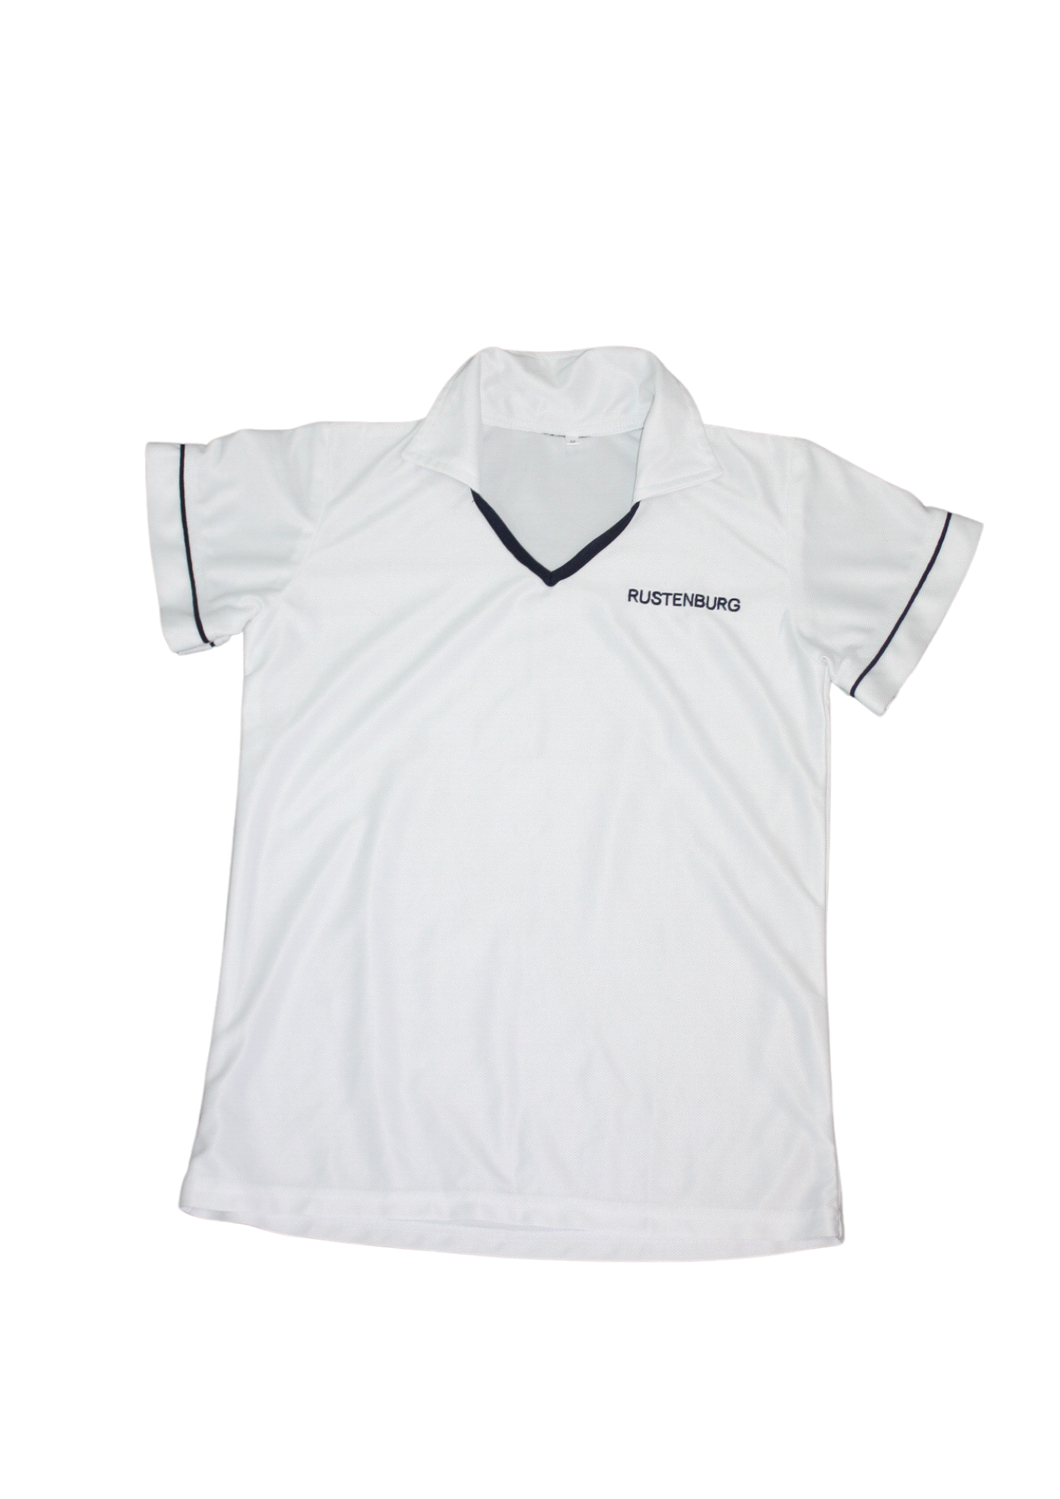 Cricket Shirt White